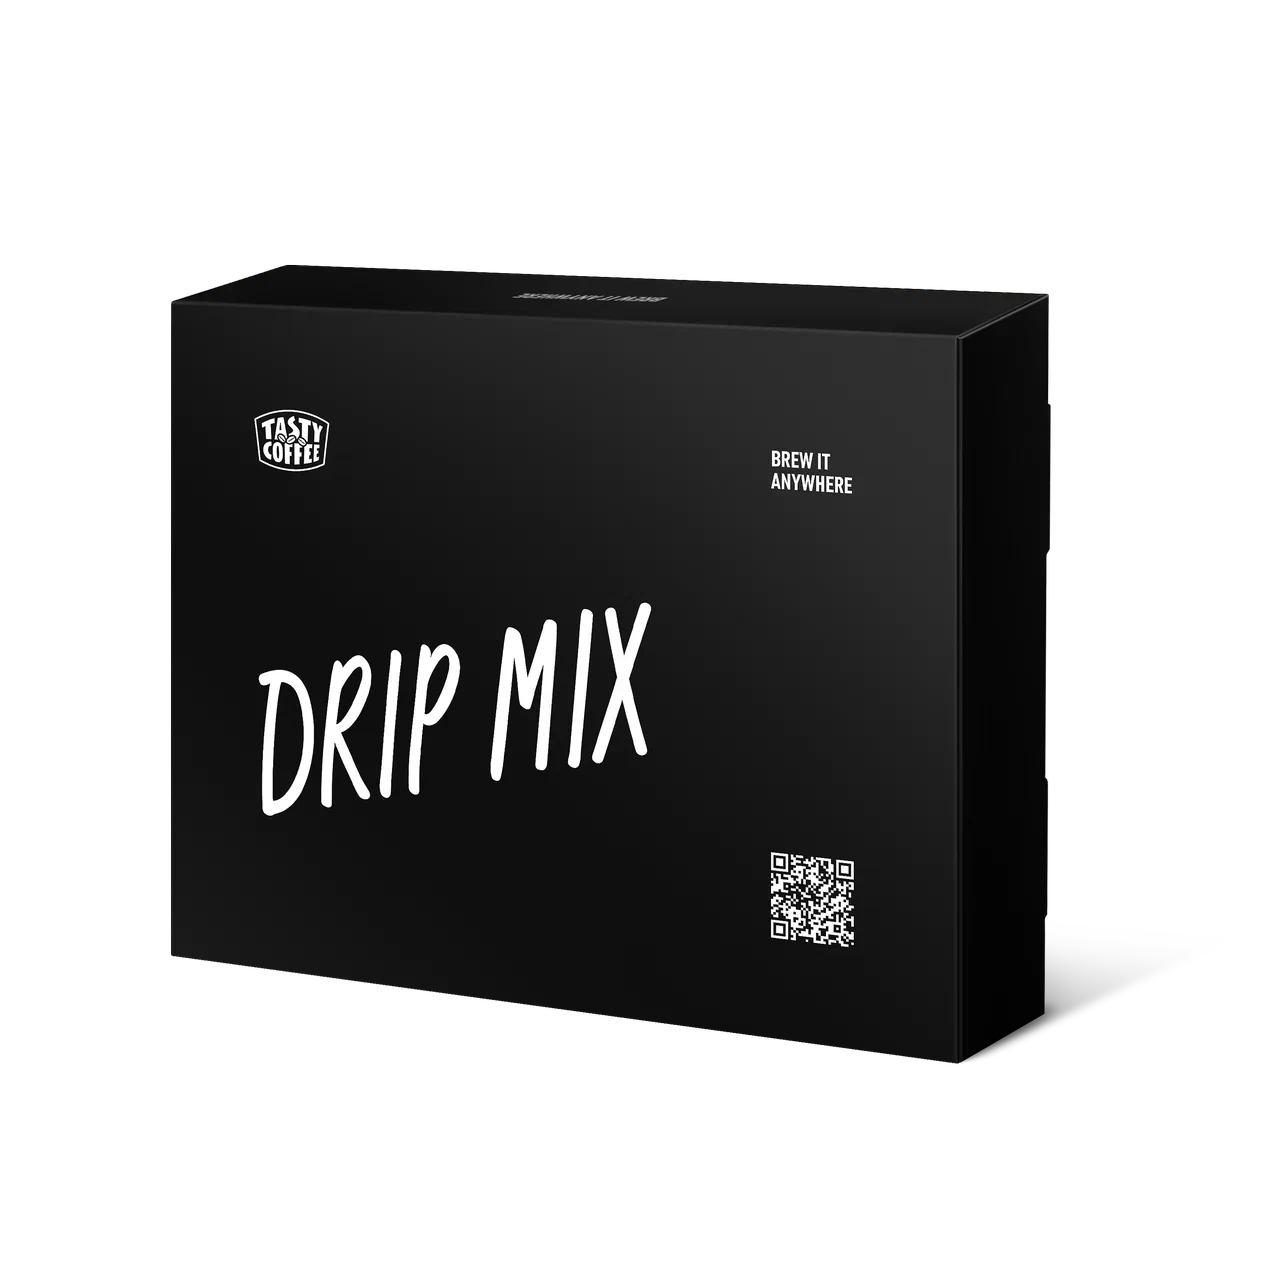 Drip mix